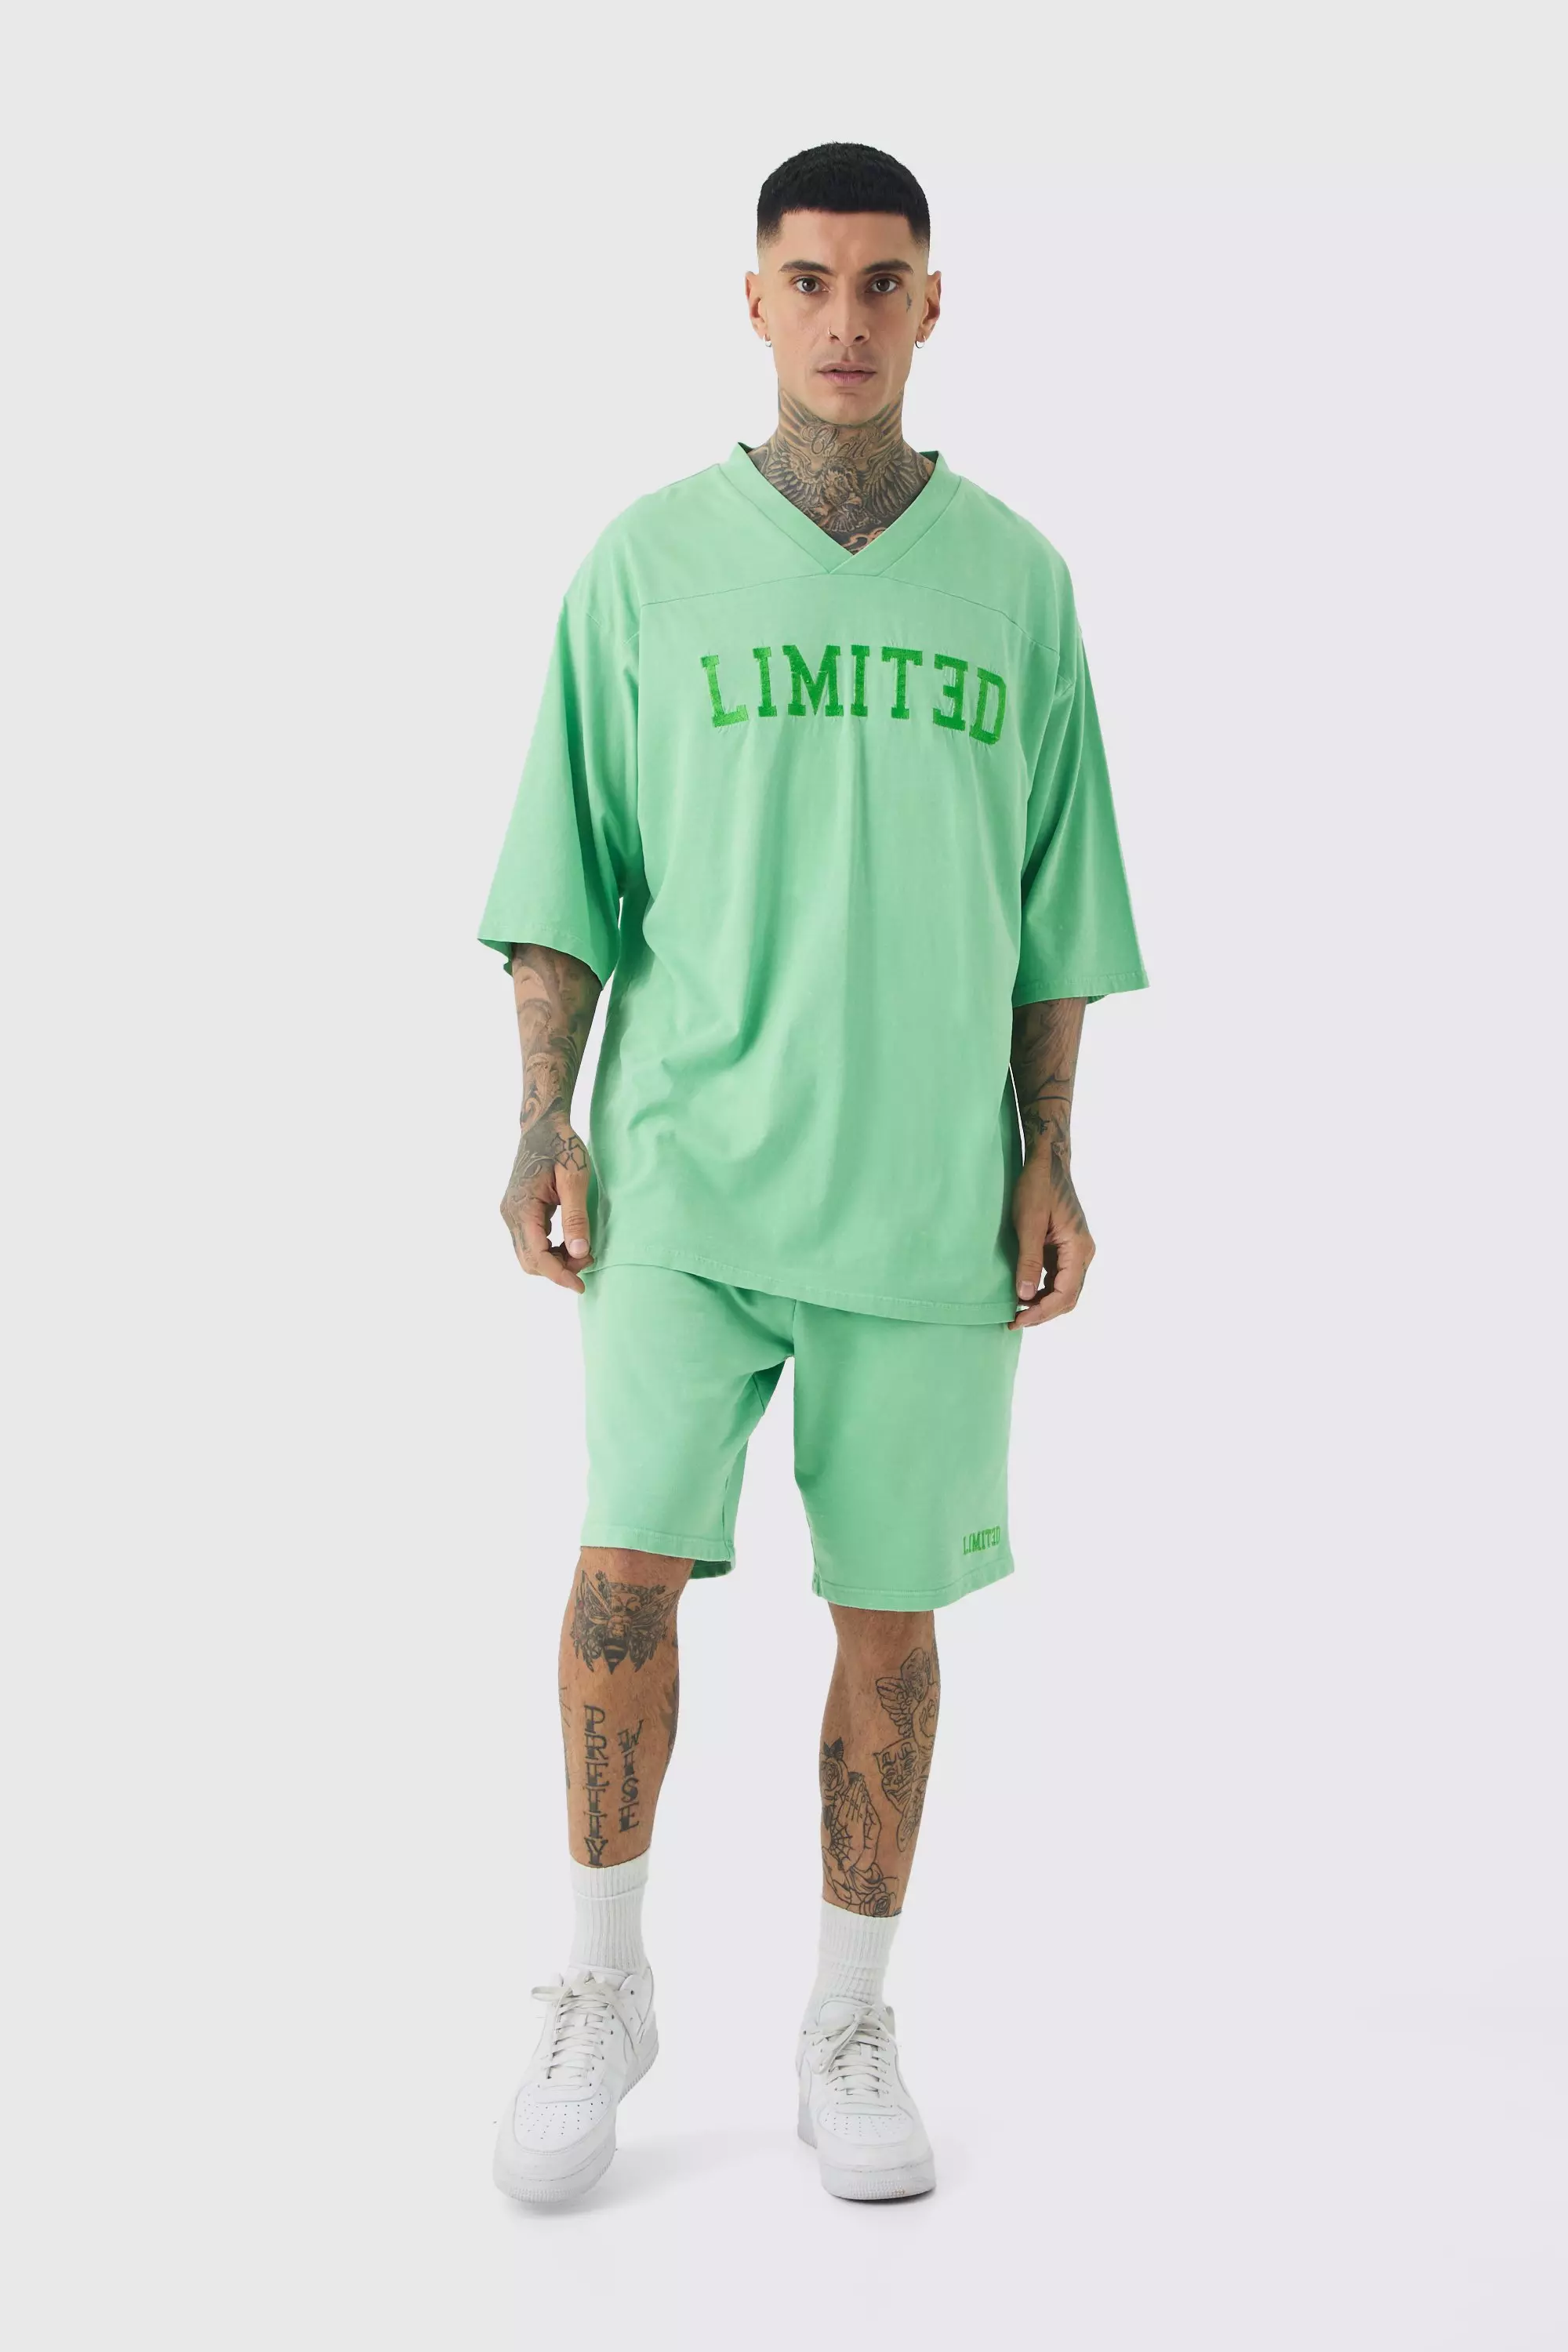 Tall Embroidery Limited Football T-shirt & Short Set Green